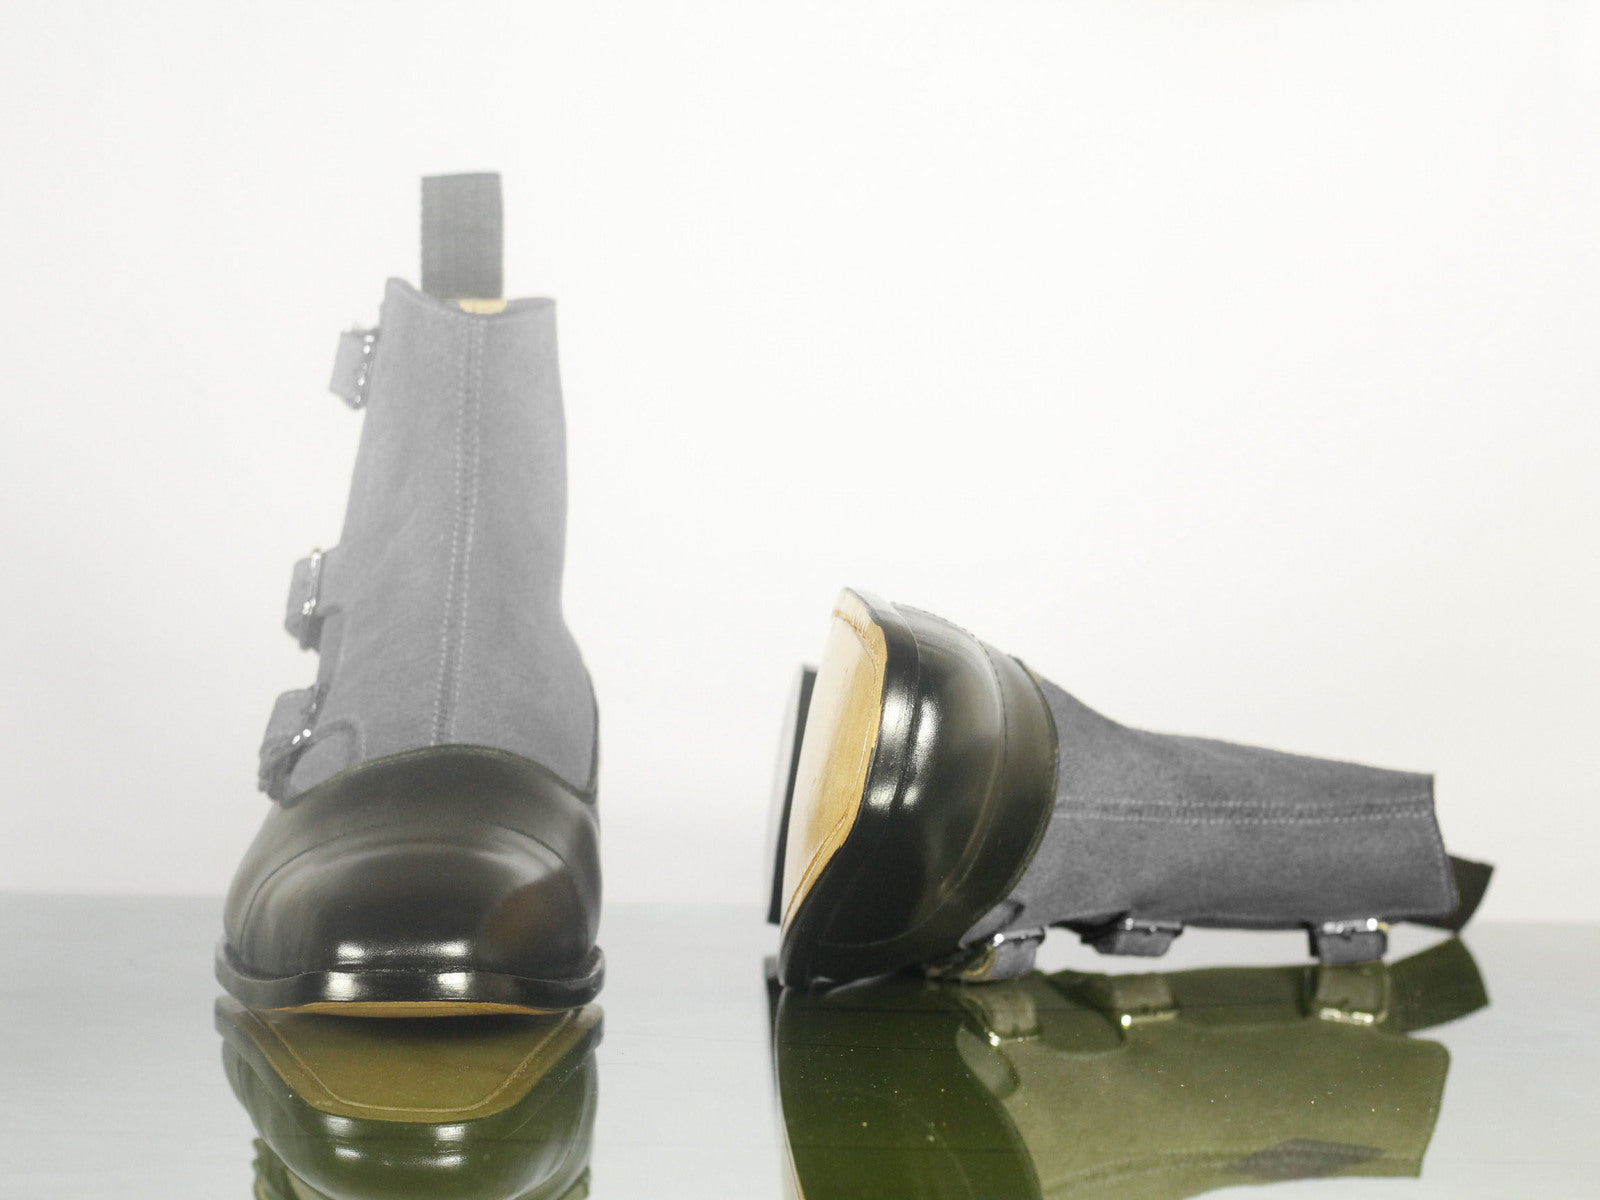 Handmade Men's Black Gray Cap Toe Leather Suede Ankle Triple Monk Strap Buckle Boots, Men Designer Boots - theleathersouq